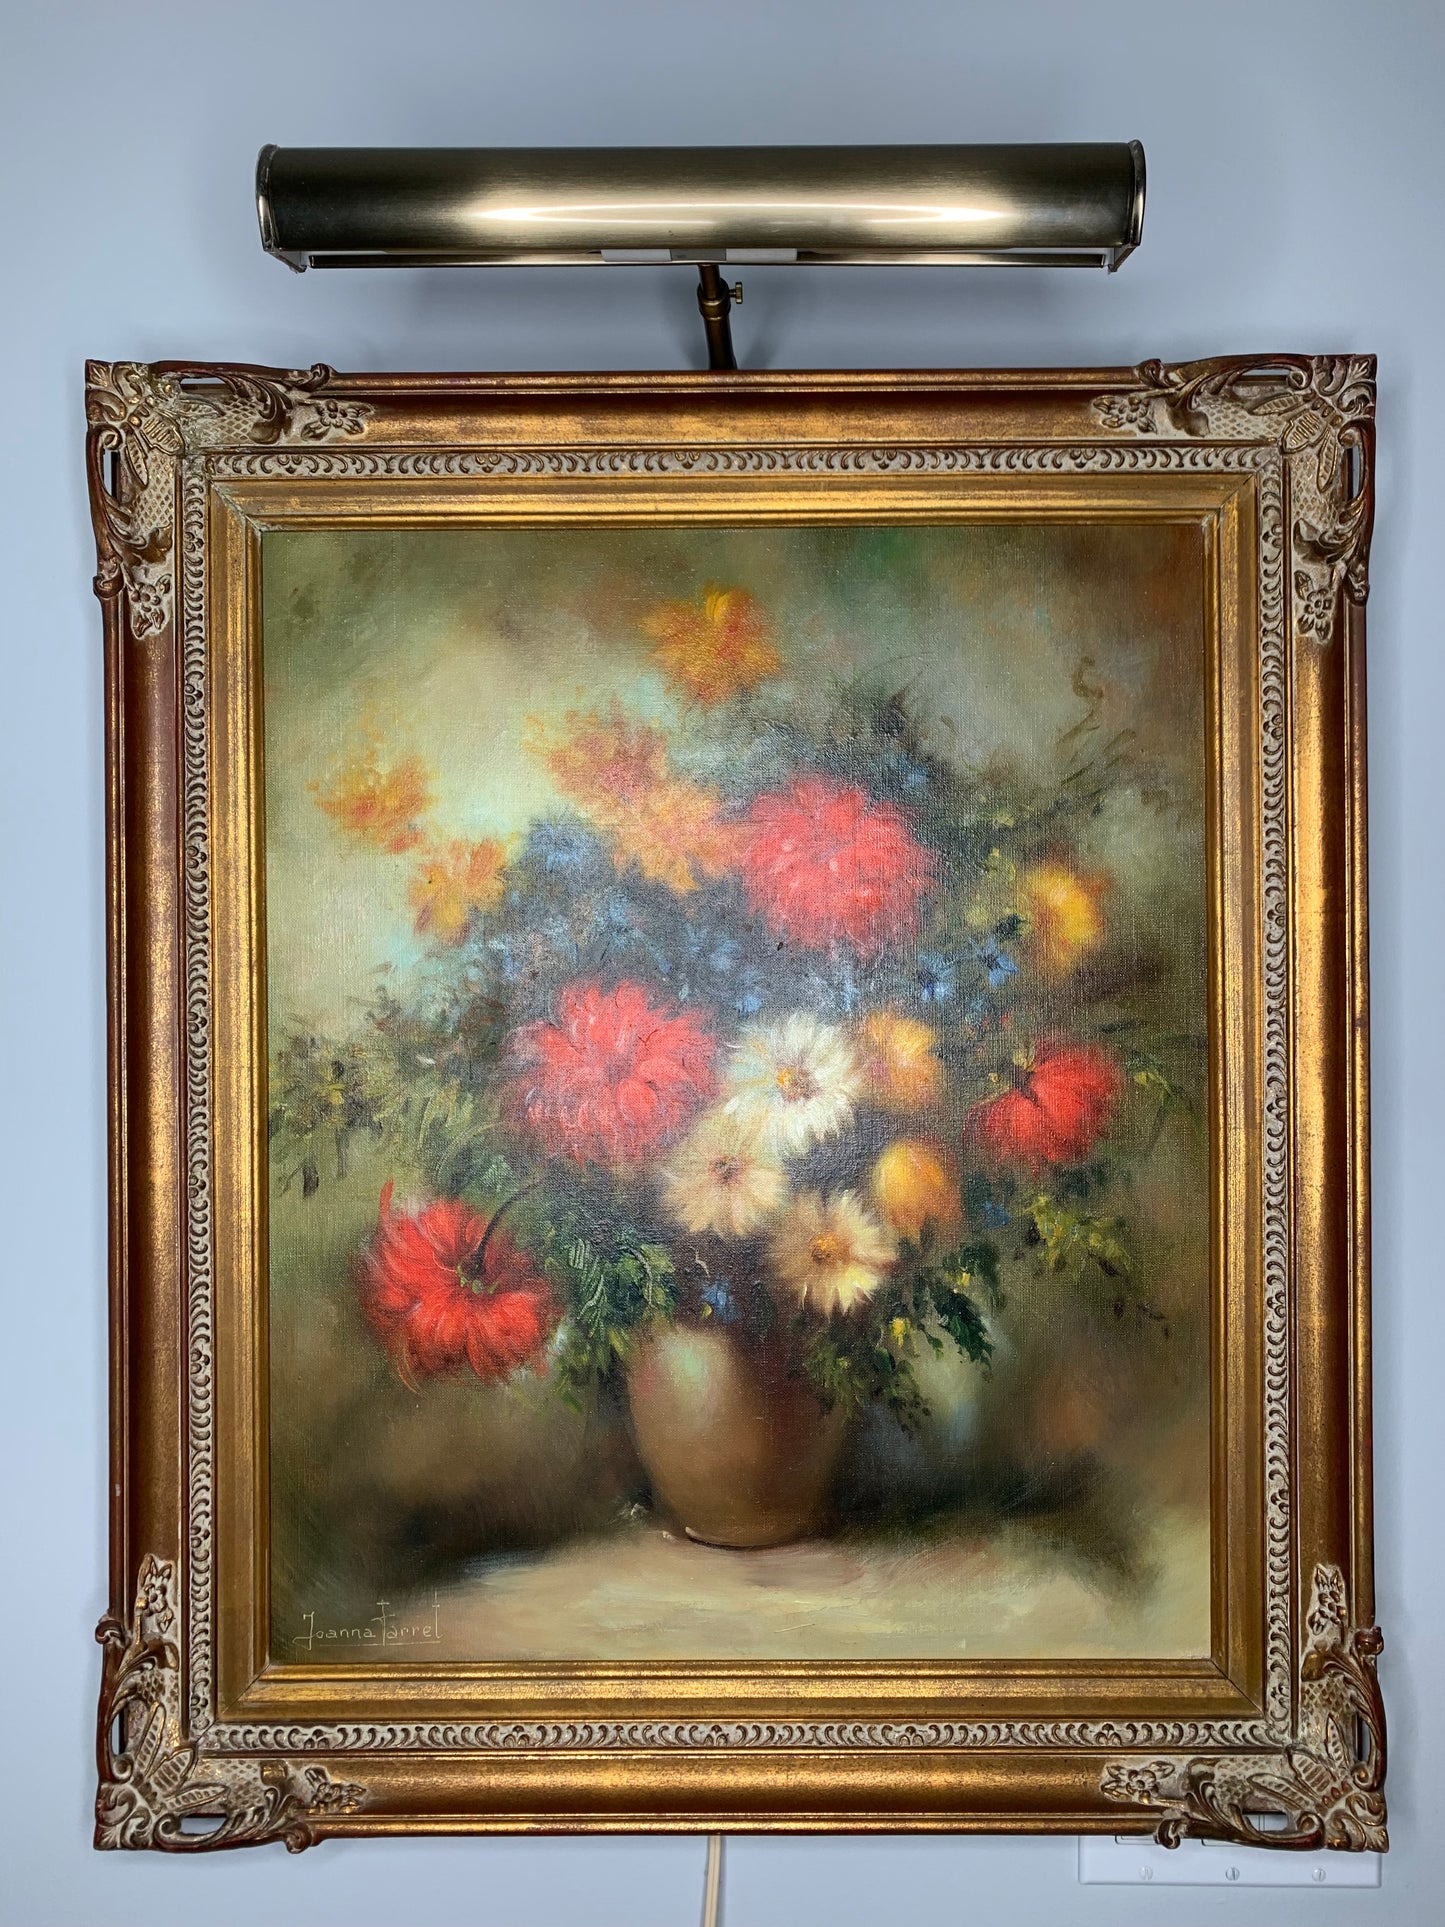 Gorgeous Vivid Original Framed Floral Still Life Oil on Canvas, 29 1/4" x 25.5"